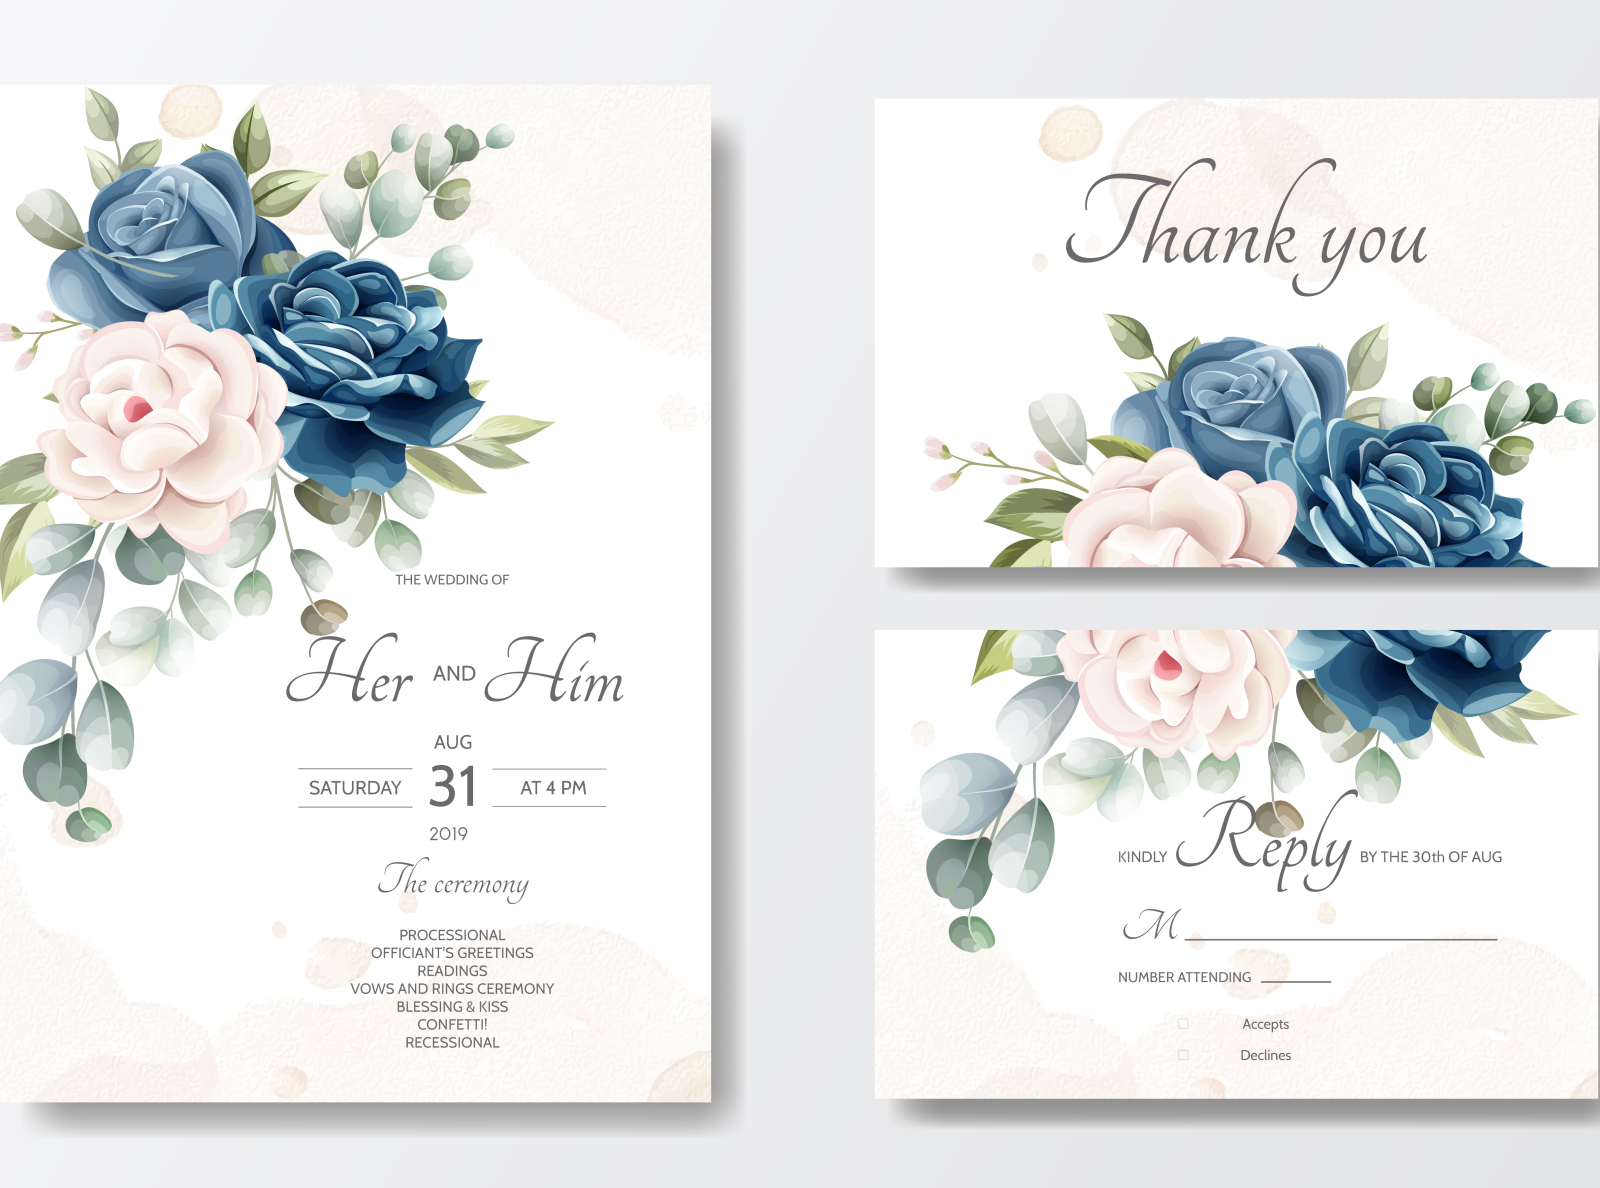 Sample Wedding Invitation Cards Templates